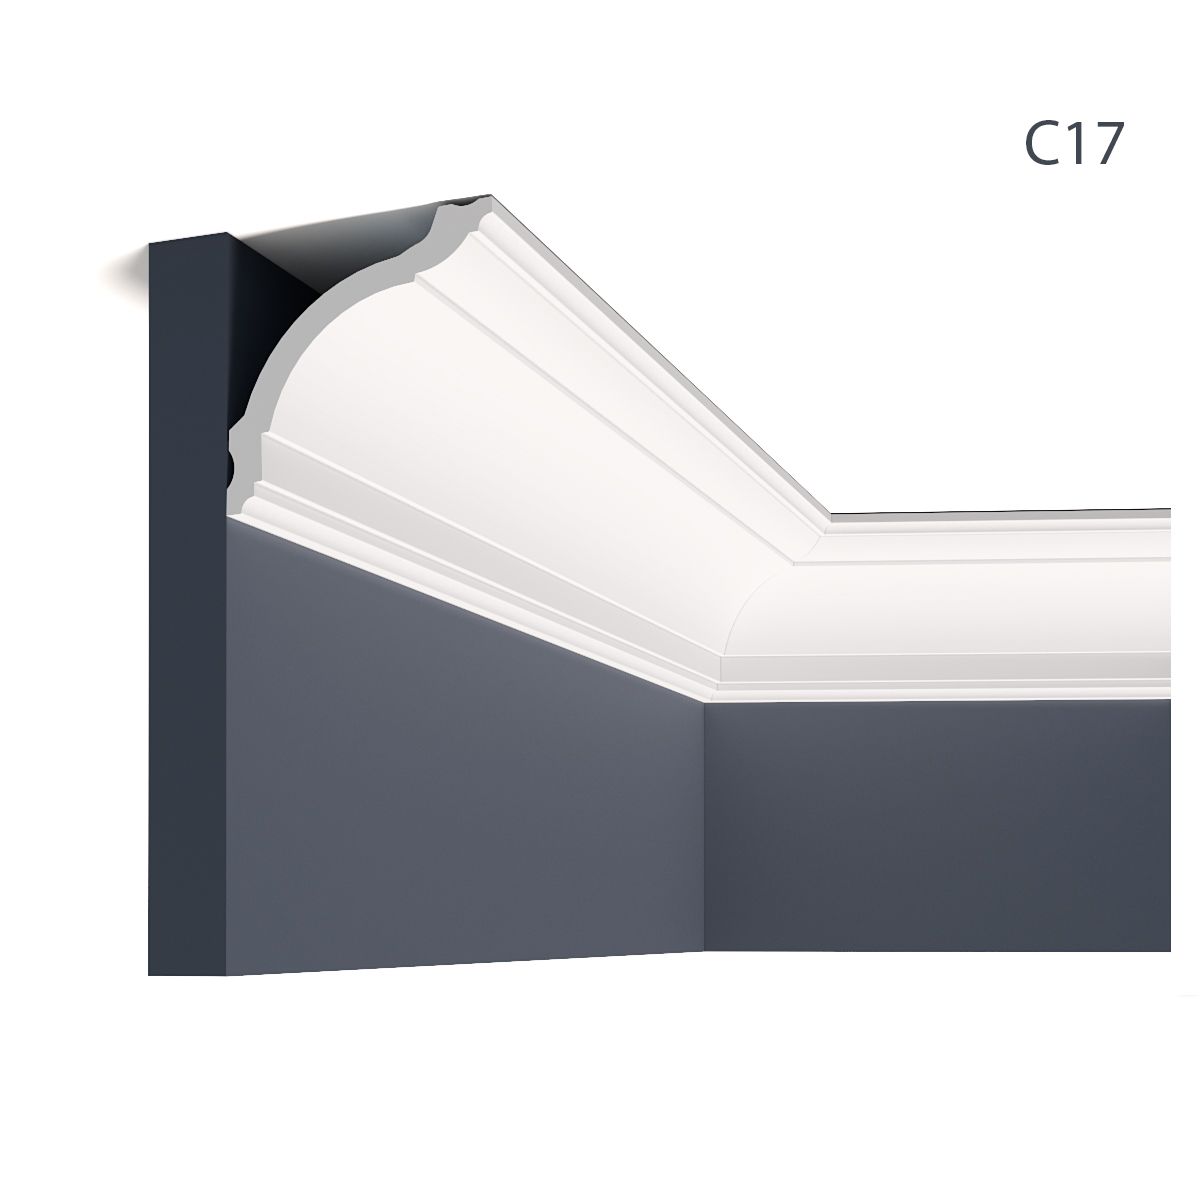 Cornișe tavan Manavi MNV-C17 - 9.3x9.5x200, material: polimer rigid